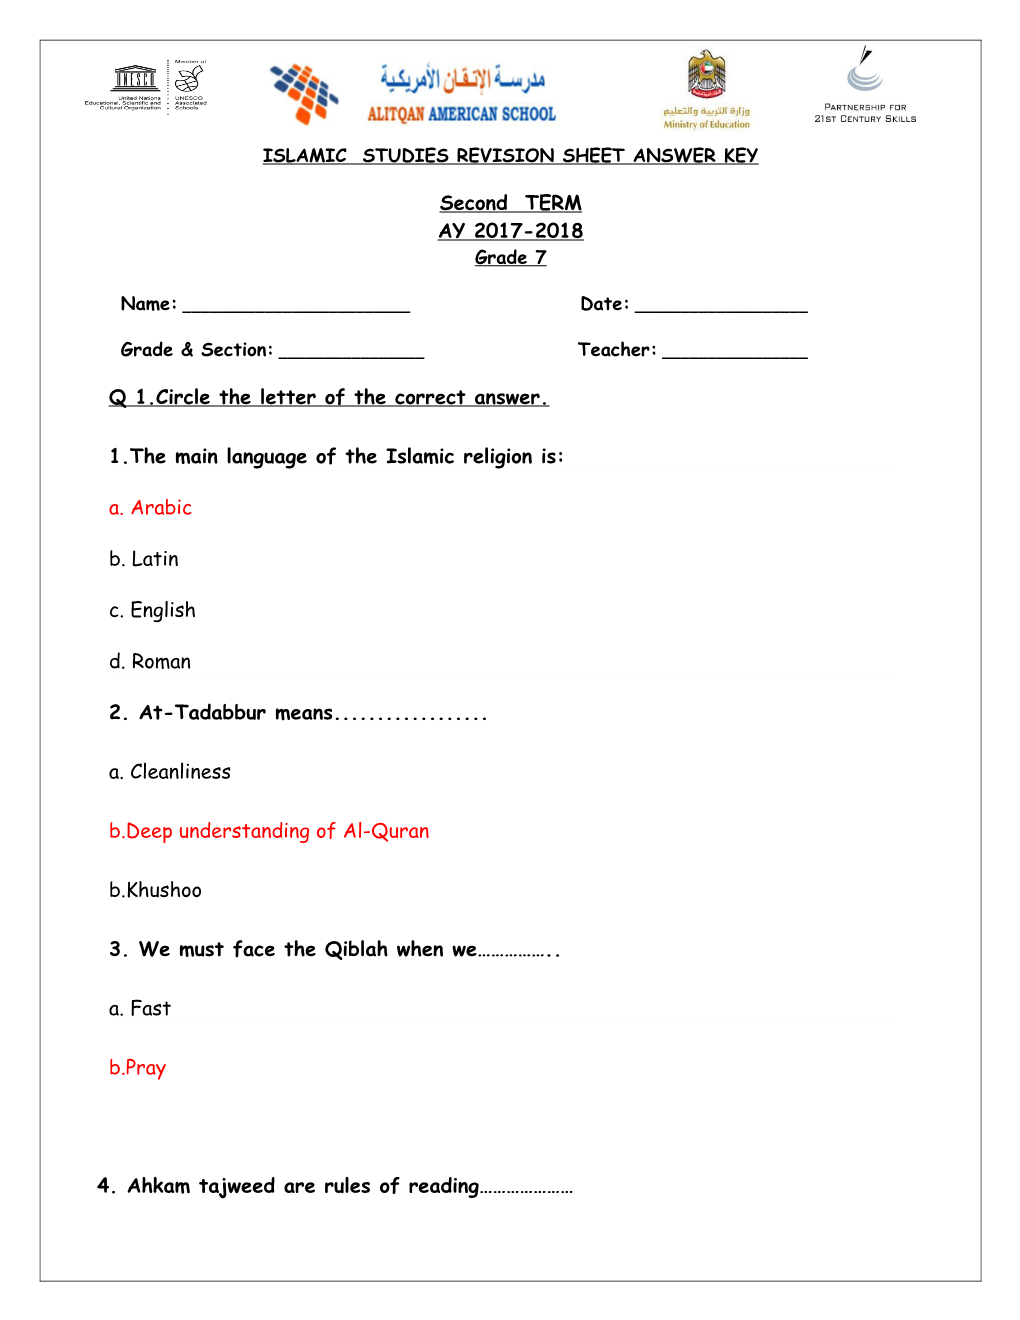 Islamic Studies Revision Sheet Answer Key